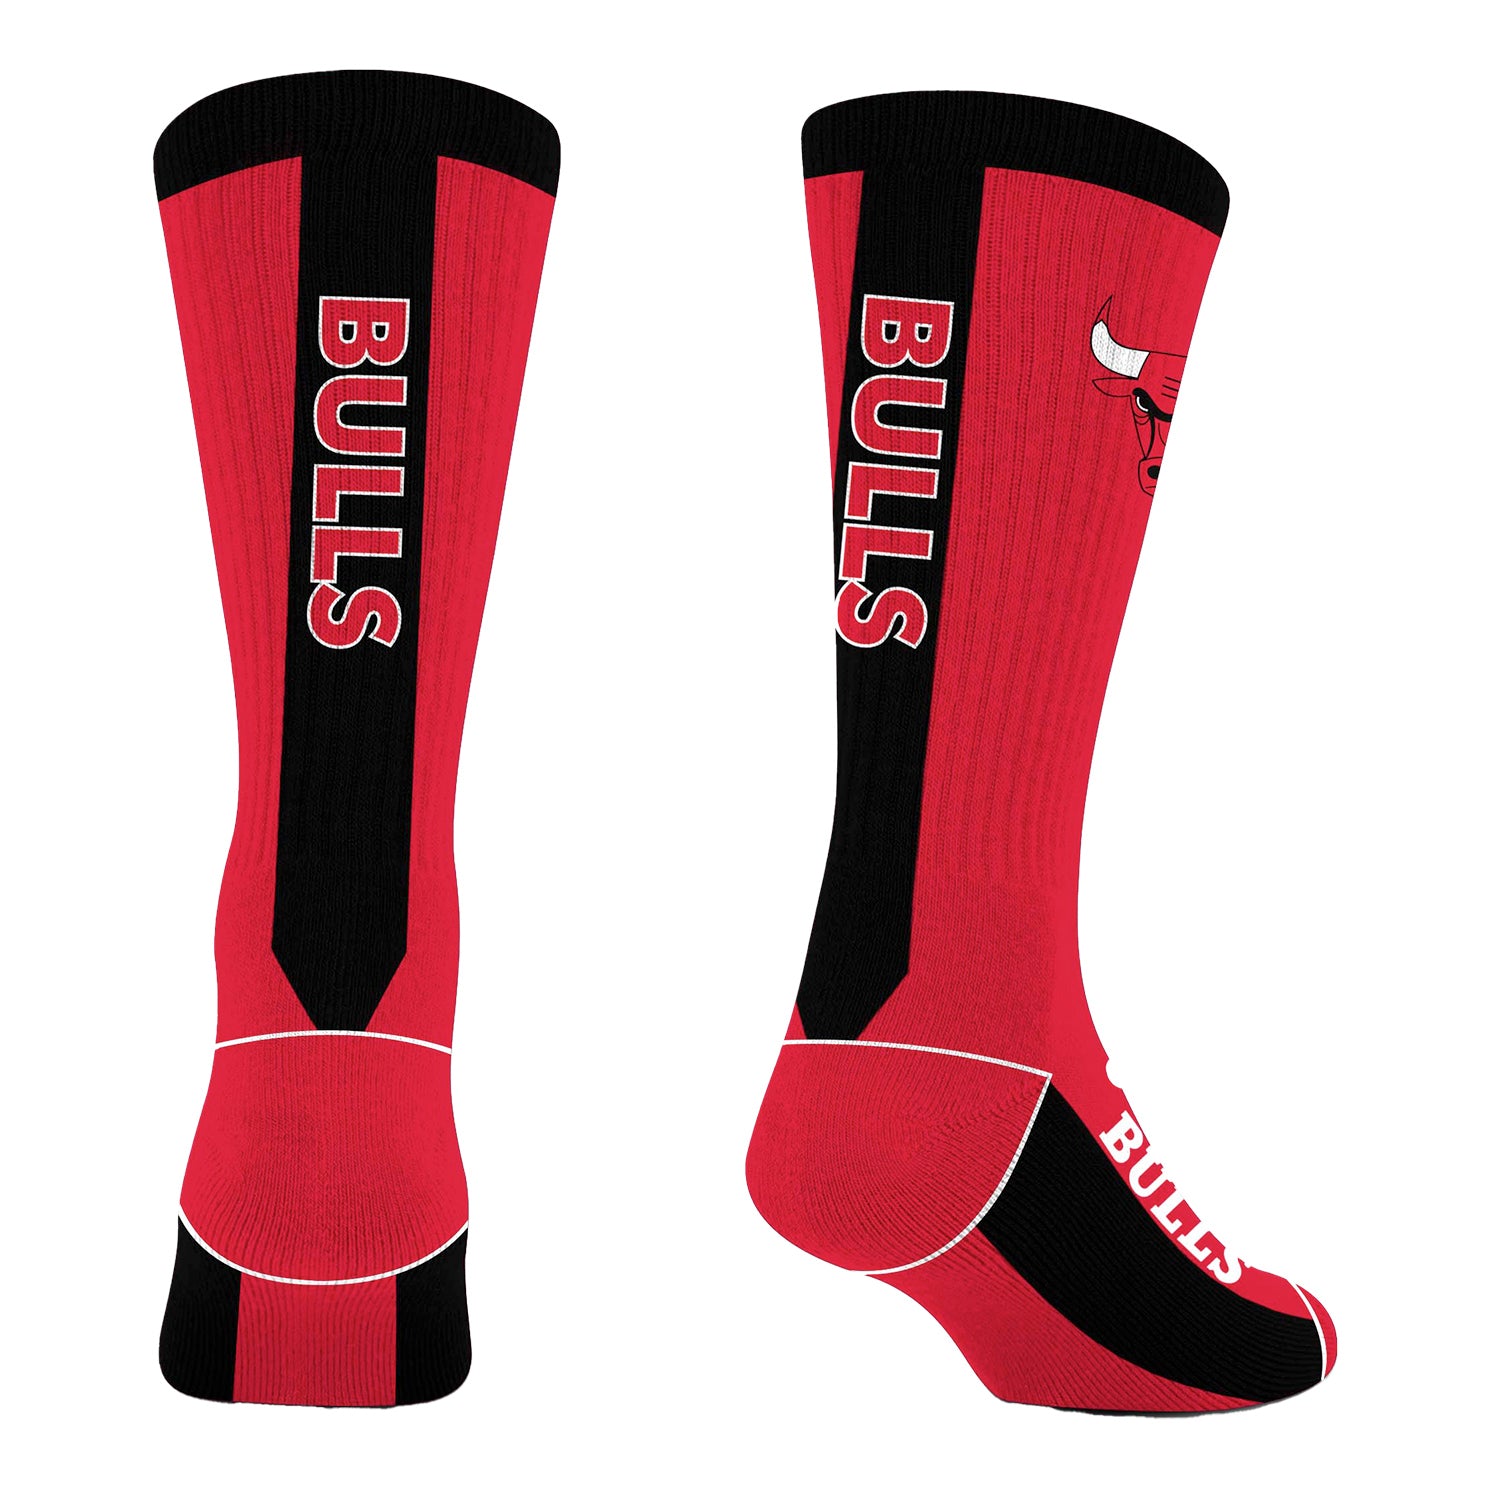 Unisex Nike Nikola Vucevic Red Chicago Bulls Swingman Jersey - Icon Edition